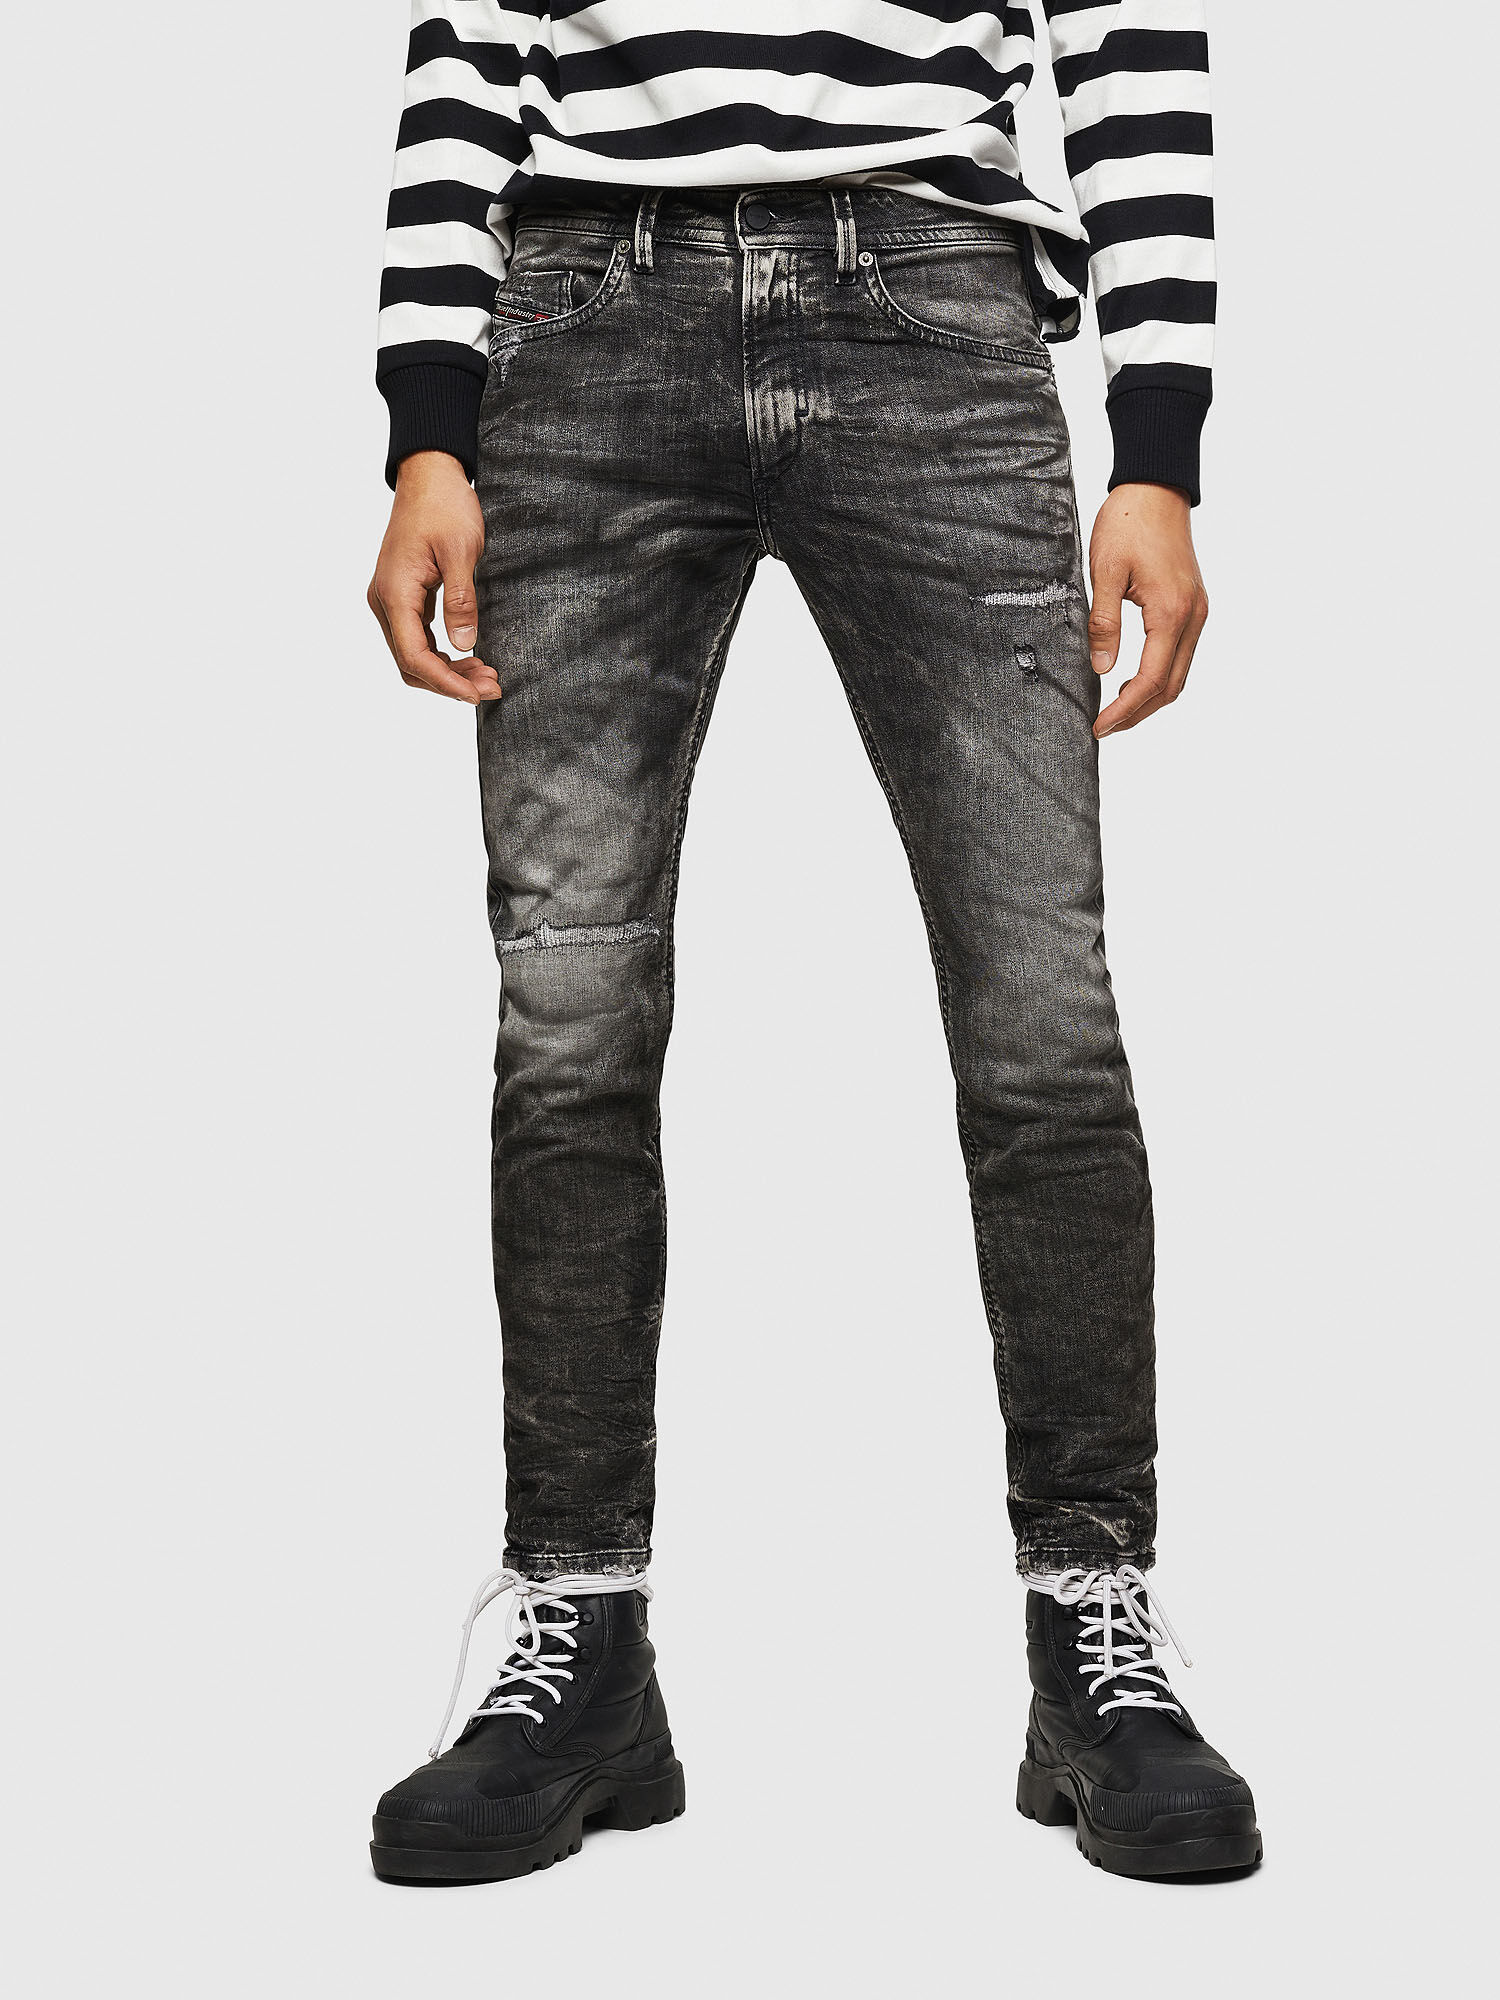 kohl's levi's high waisted jeans